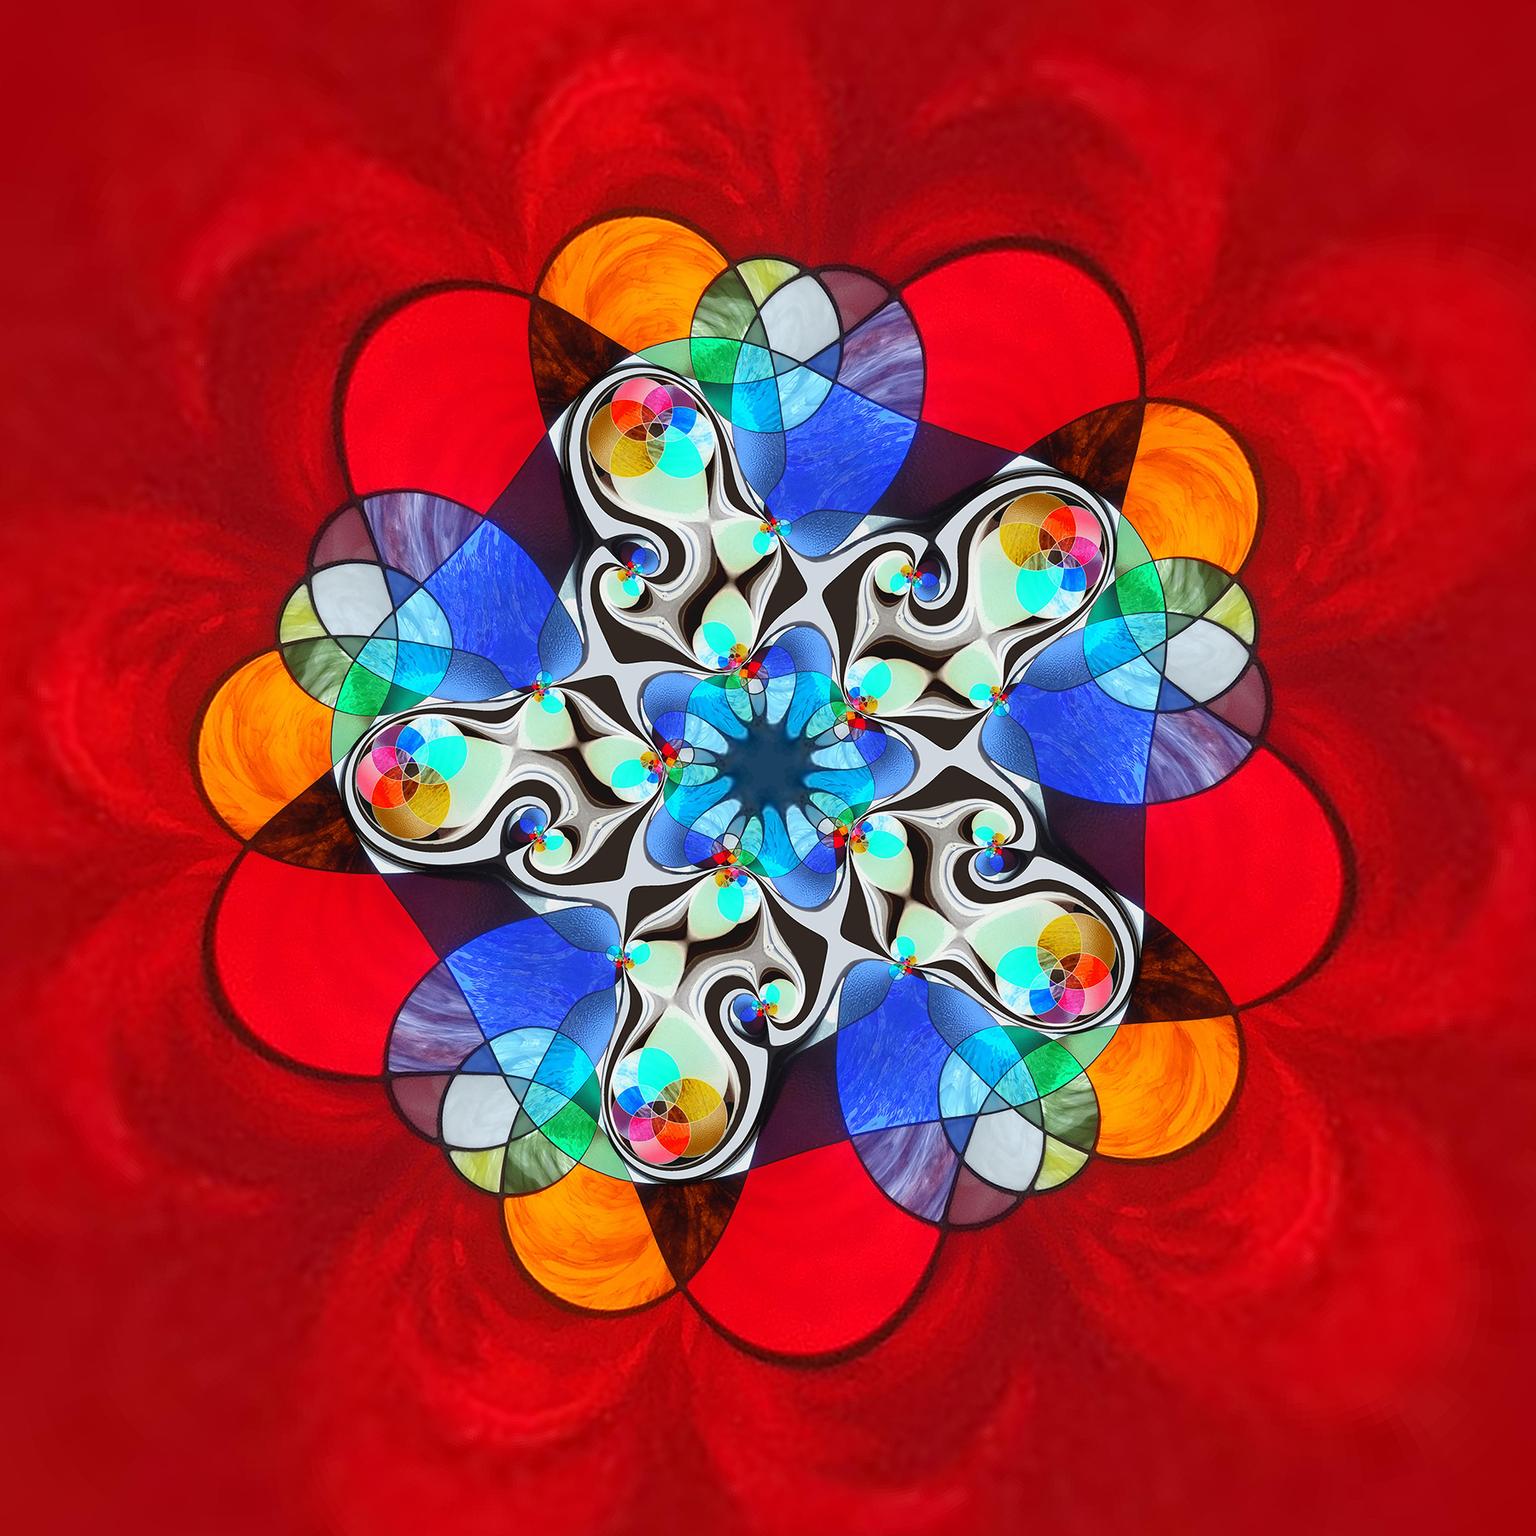 Image for entry 'Glass Mandala: Red'